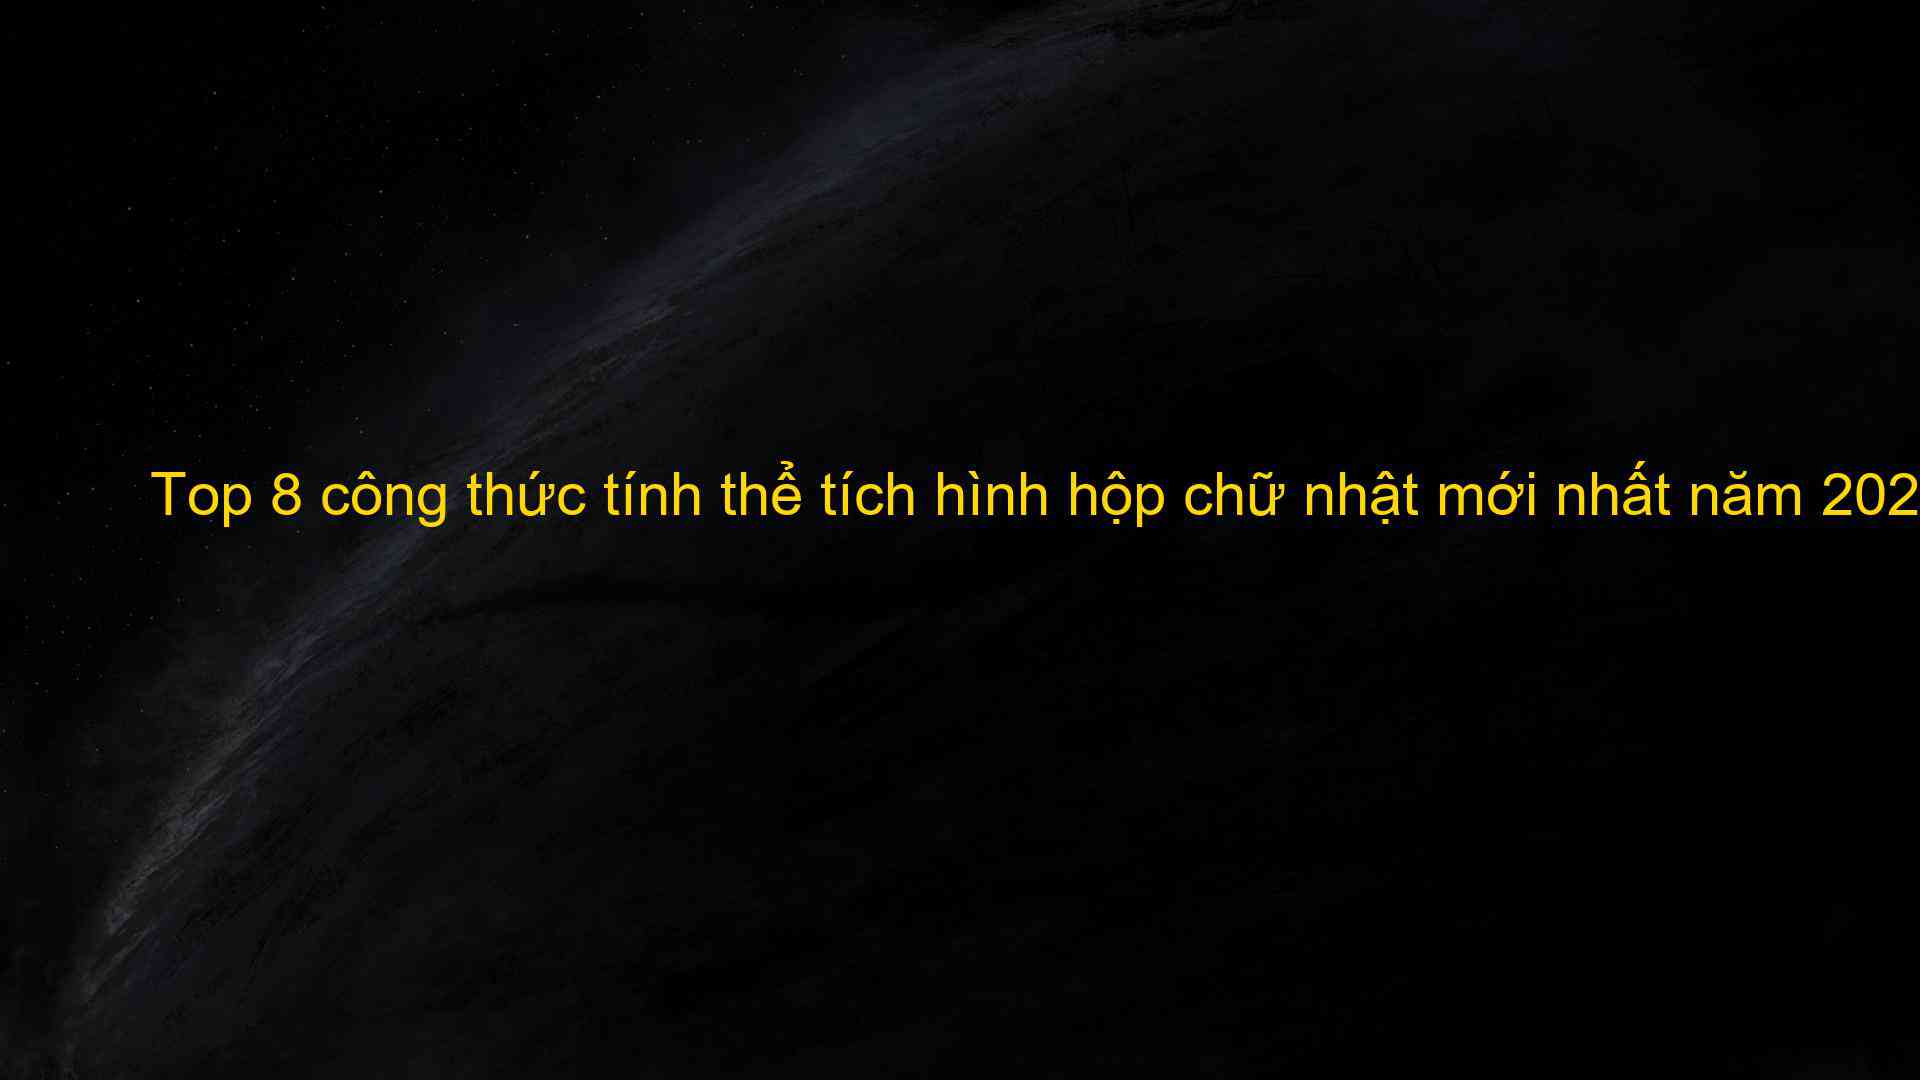 Top 8 cong thuc tinh the tich hinh hop chu nhat moi nhat nam 2022 1659710307